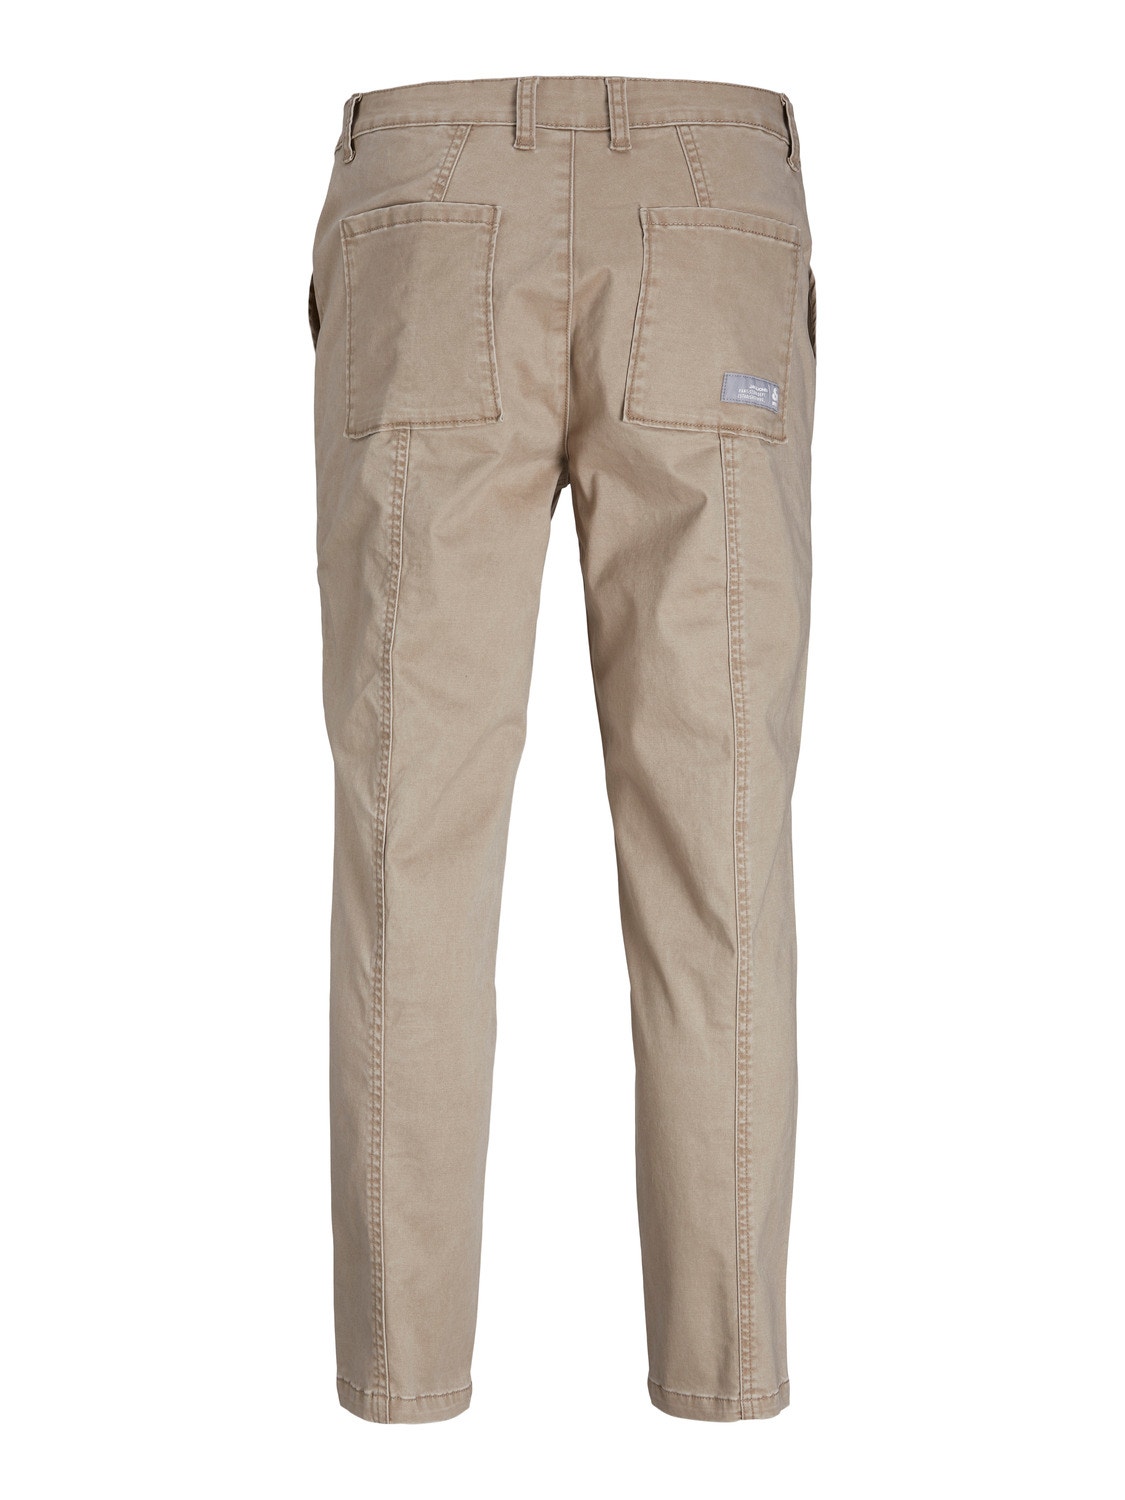 Jack & Jones Παντελόνι Regular Fit 5 τσέπης -Dune - 12220435